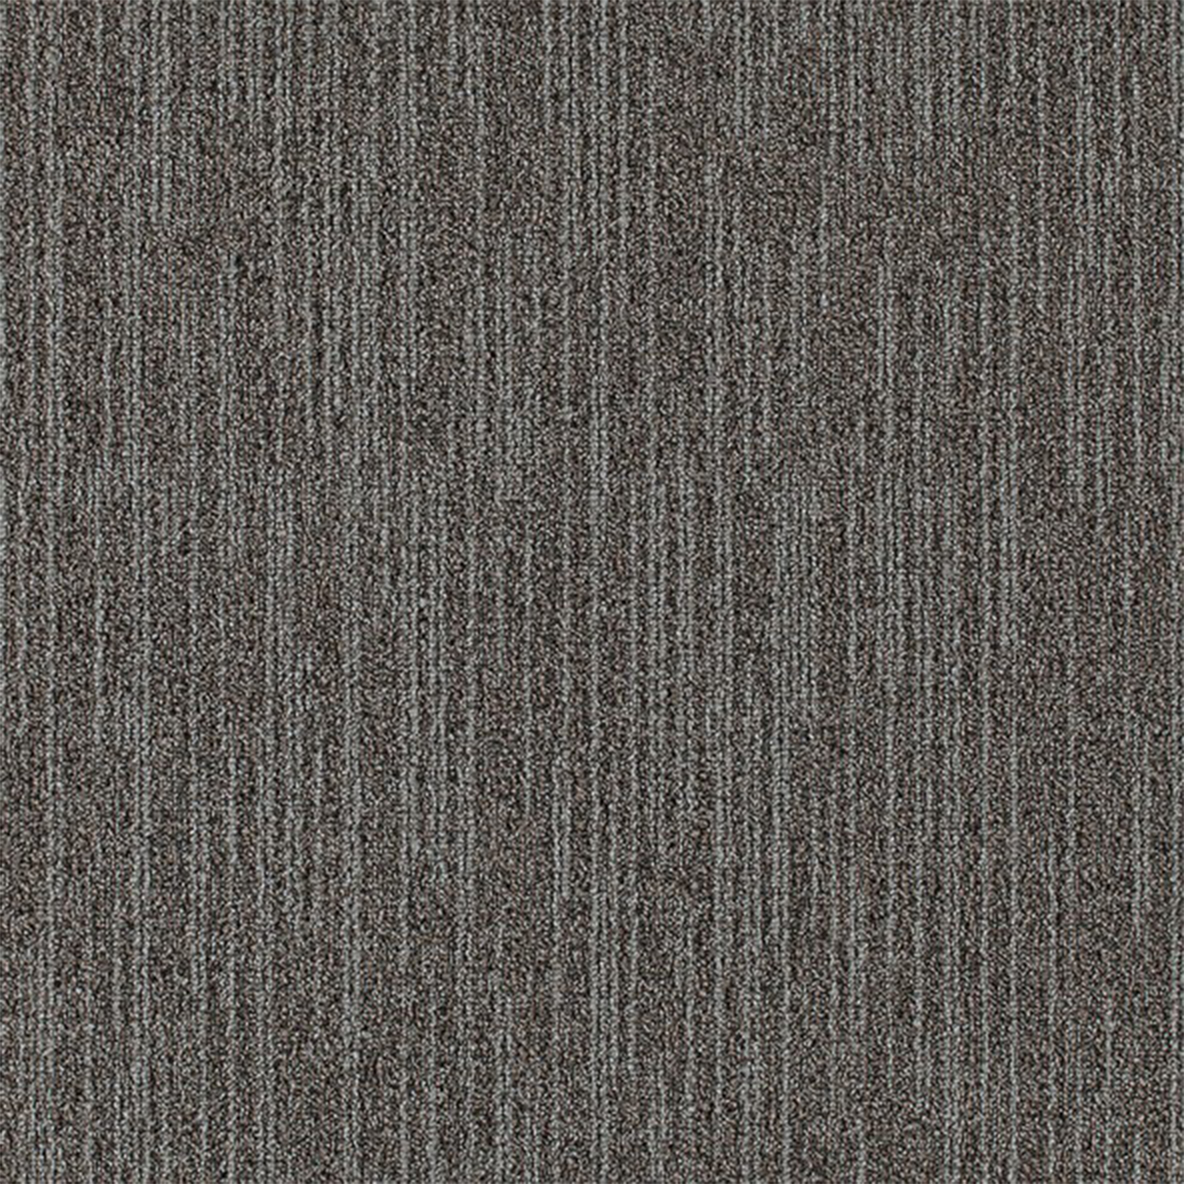 Overdirve Commercial Carpet Tile .30 Inch x 50x50 cm per Tile Dark Slate color close up